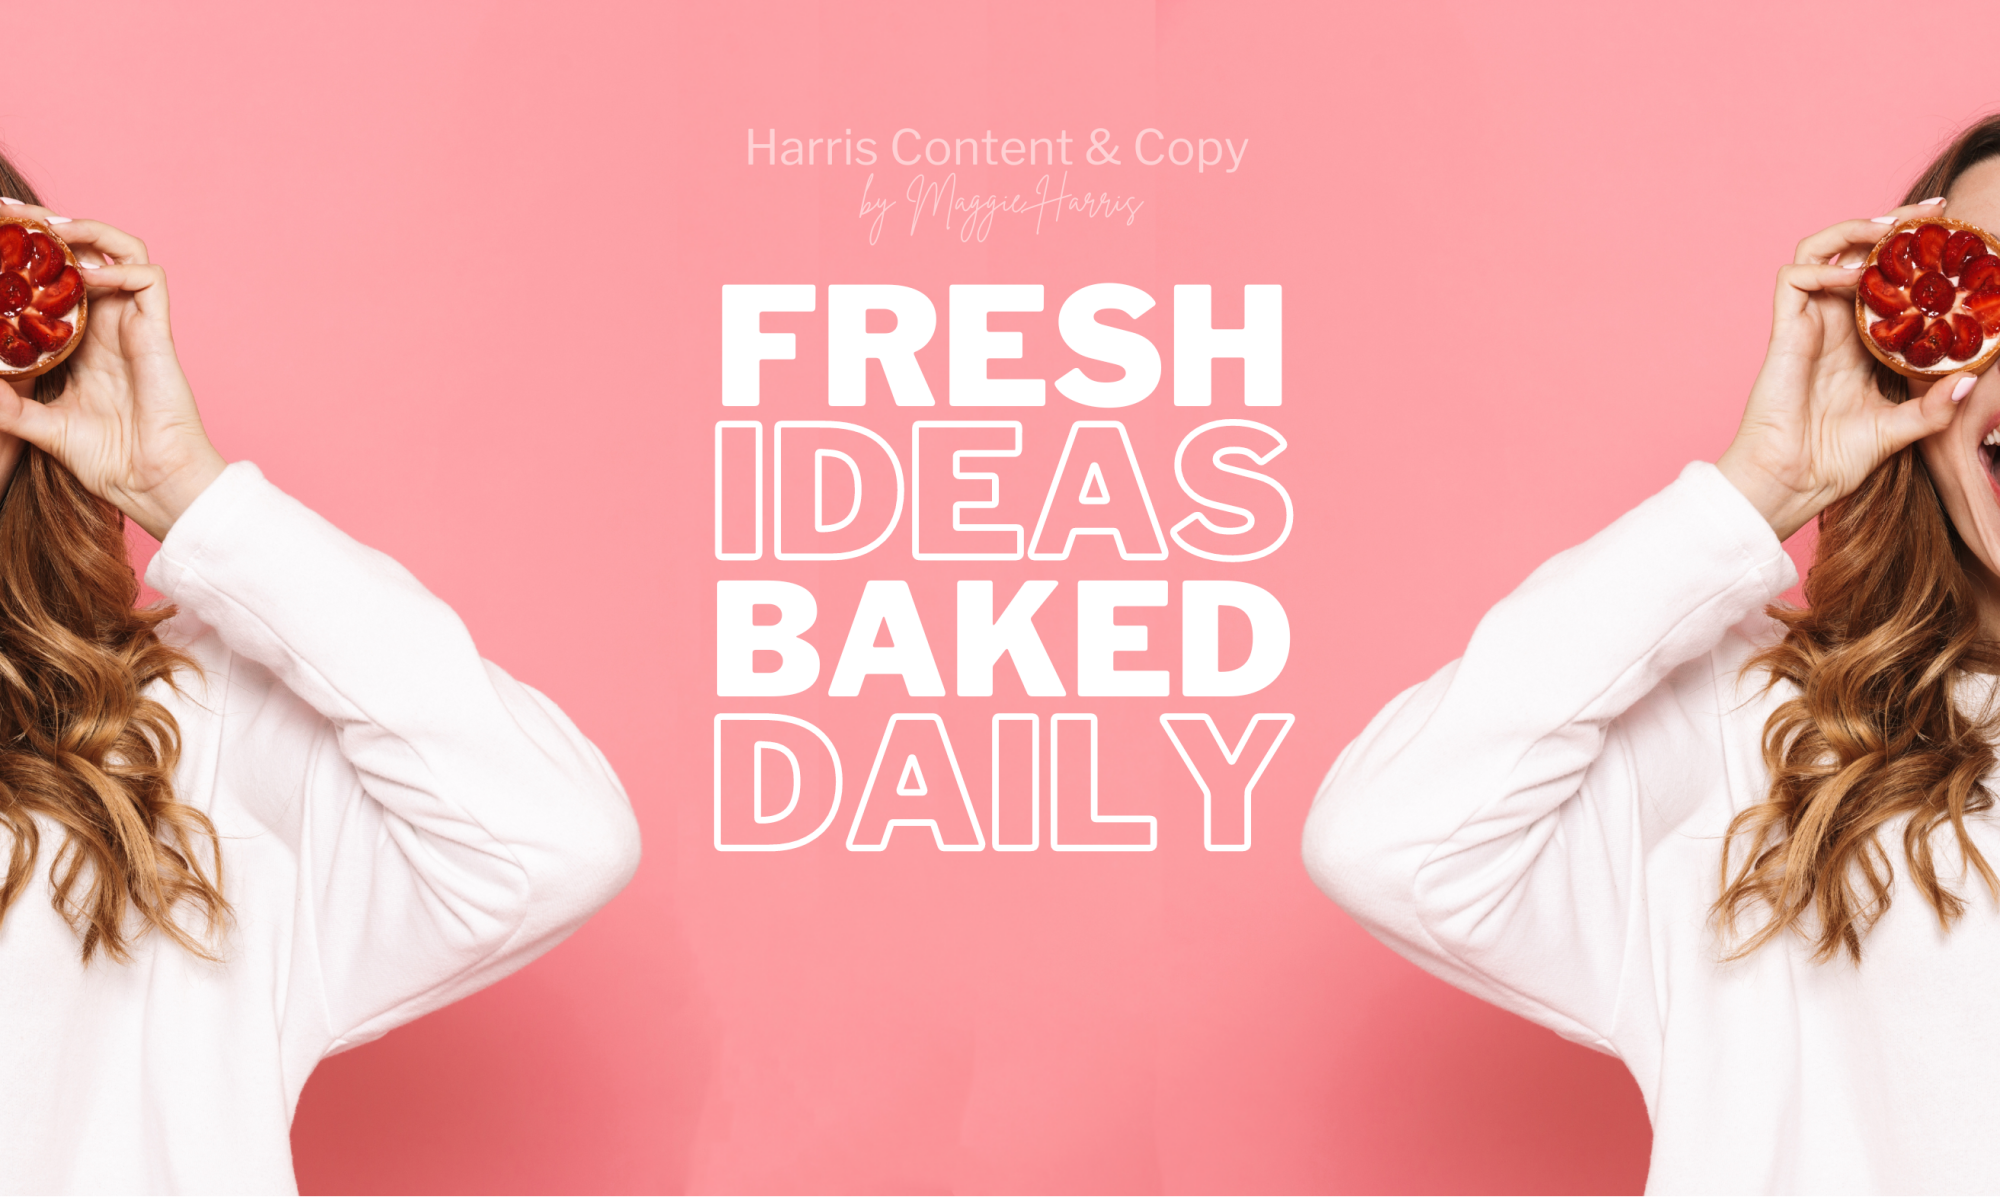 Harris Content & Copy